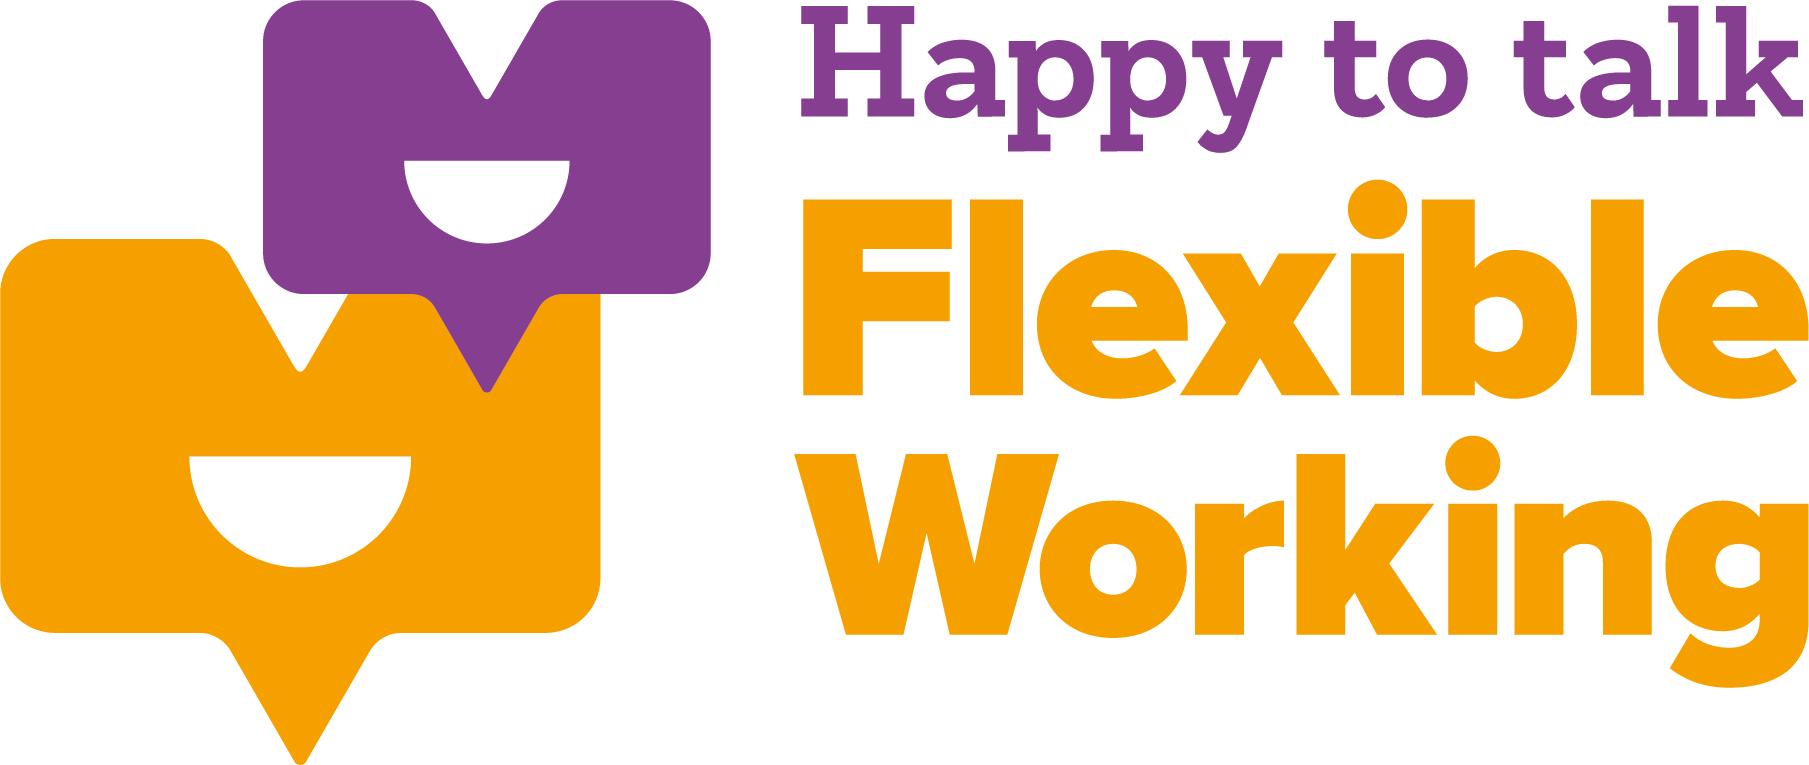 Happy to talk flexible working